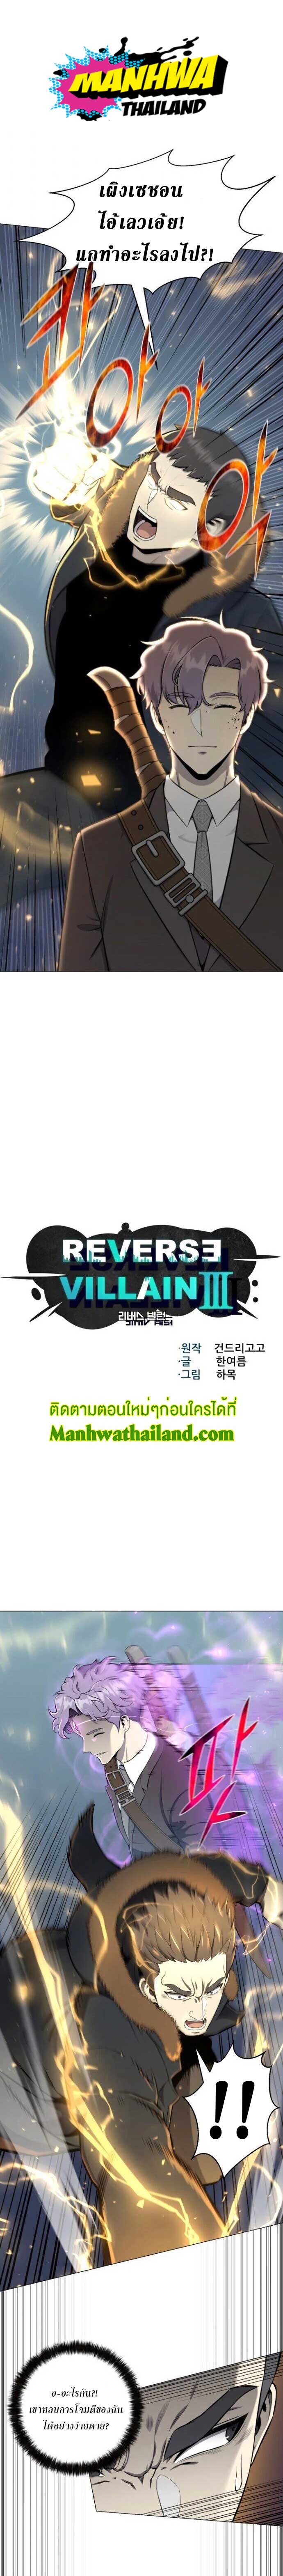 Reverse Villain 85 01